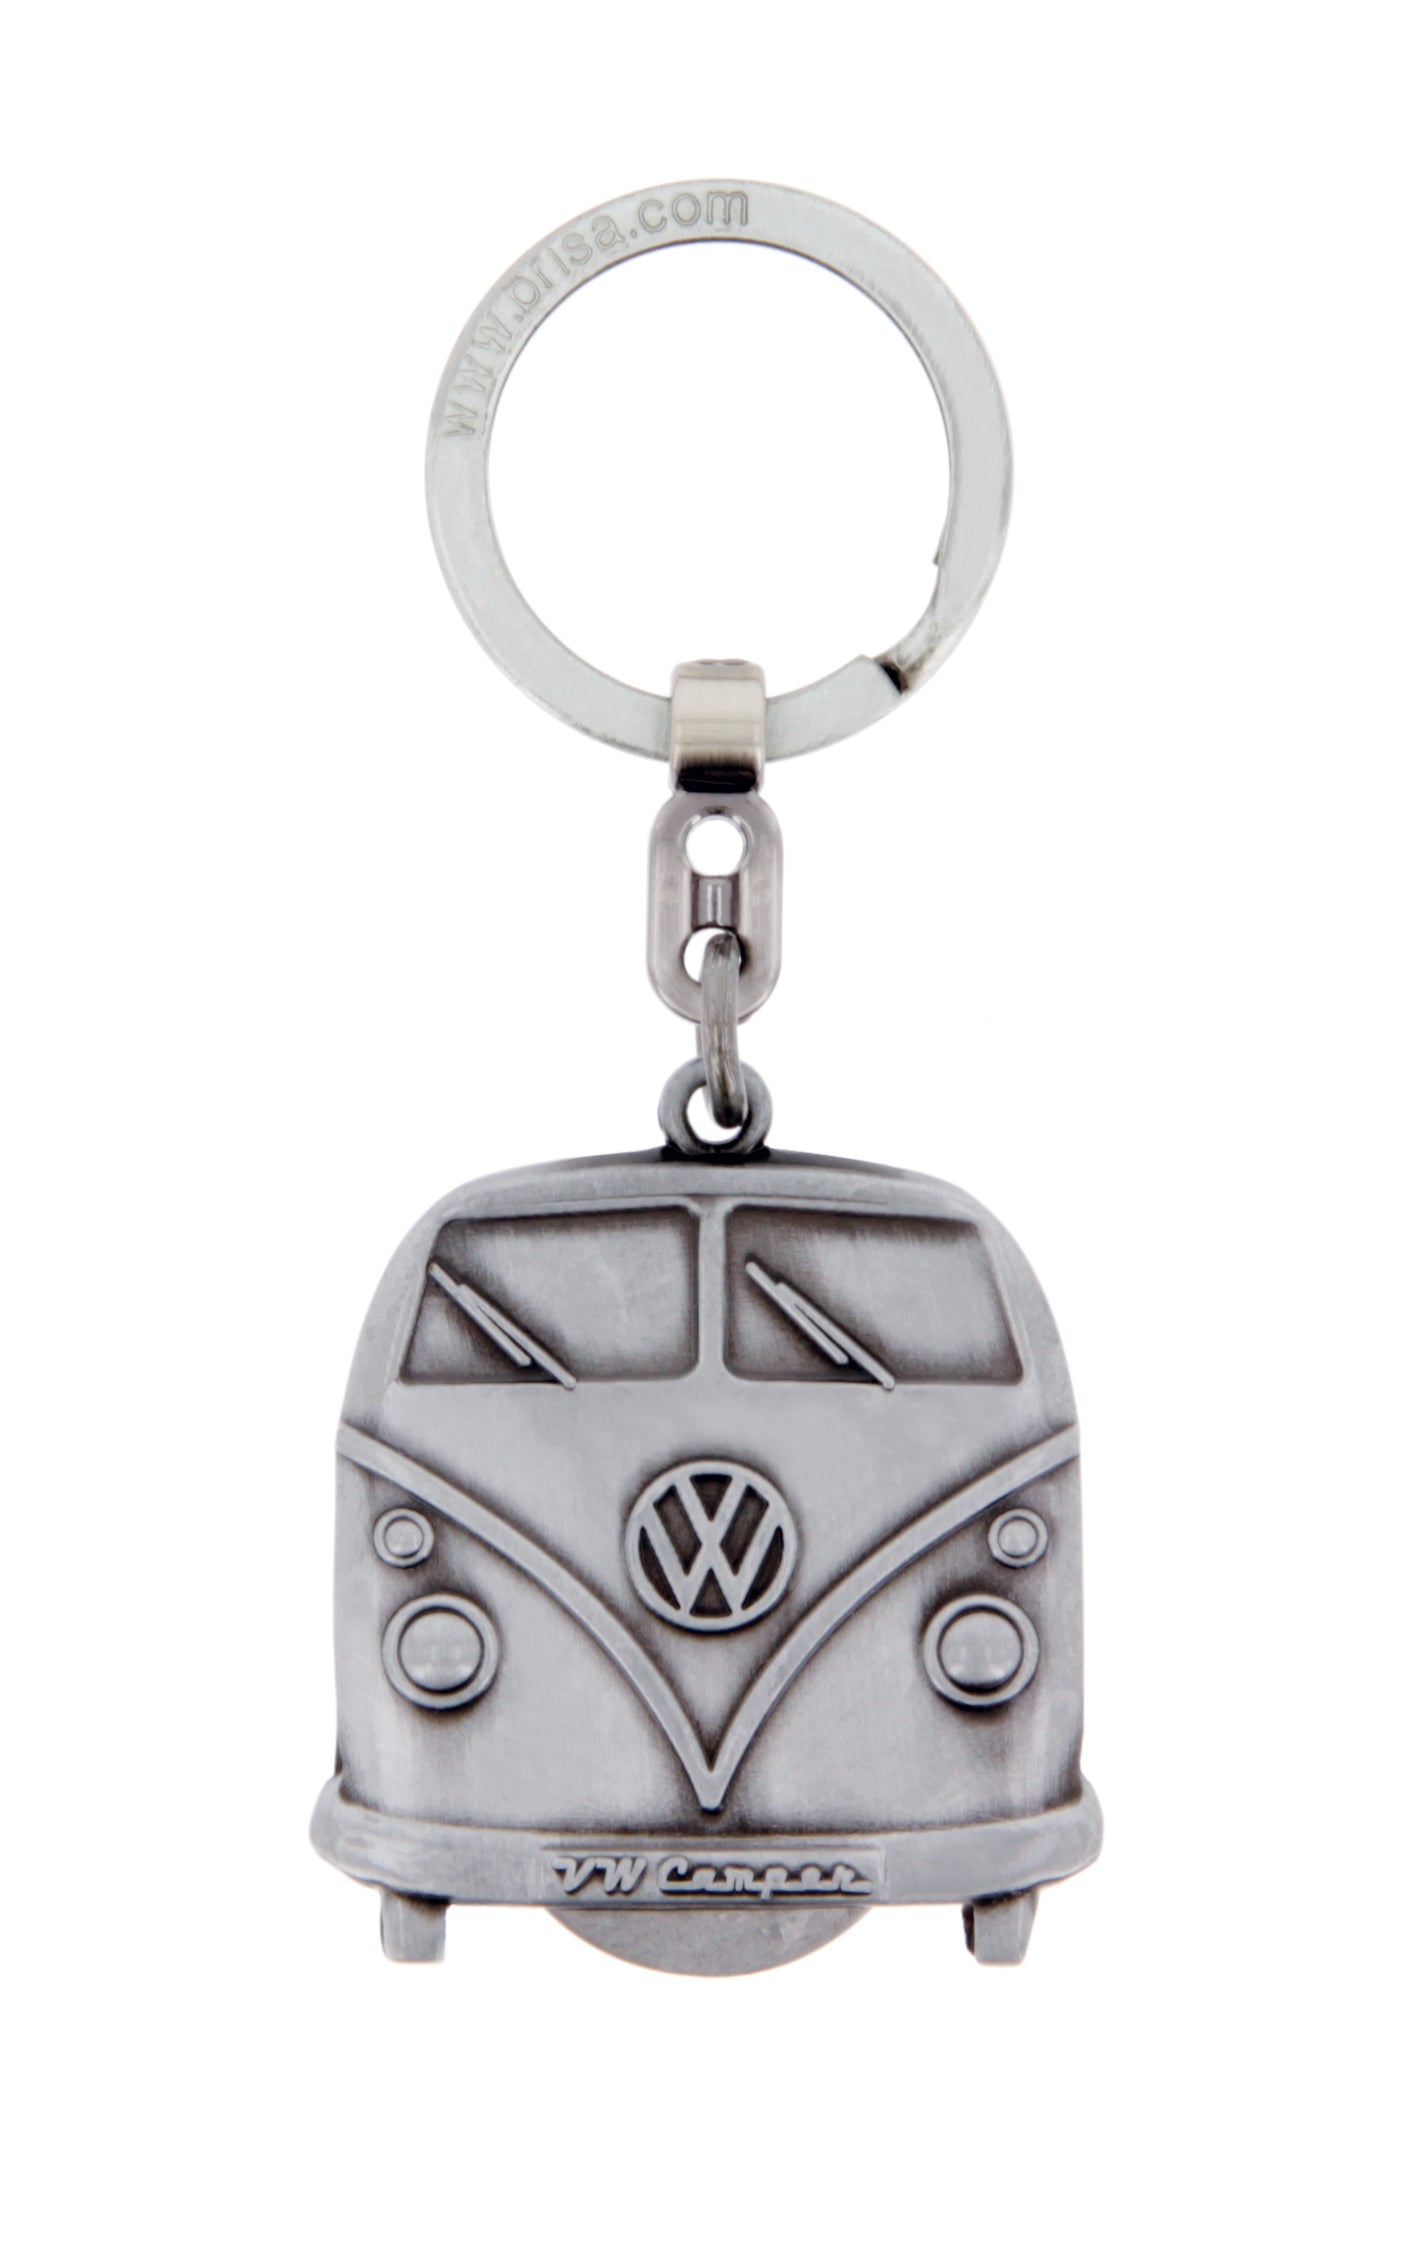 Porte-clés en patine avec jeton Combi Volkswagen – La Guimbarde